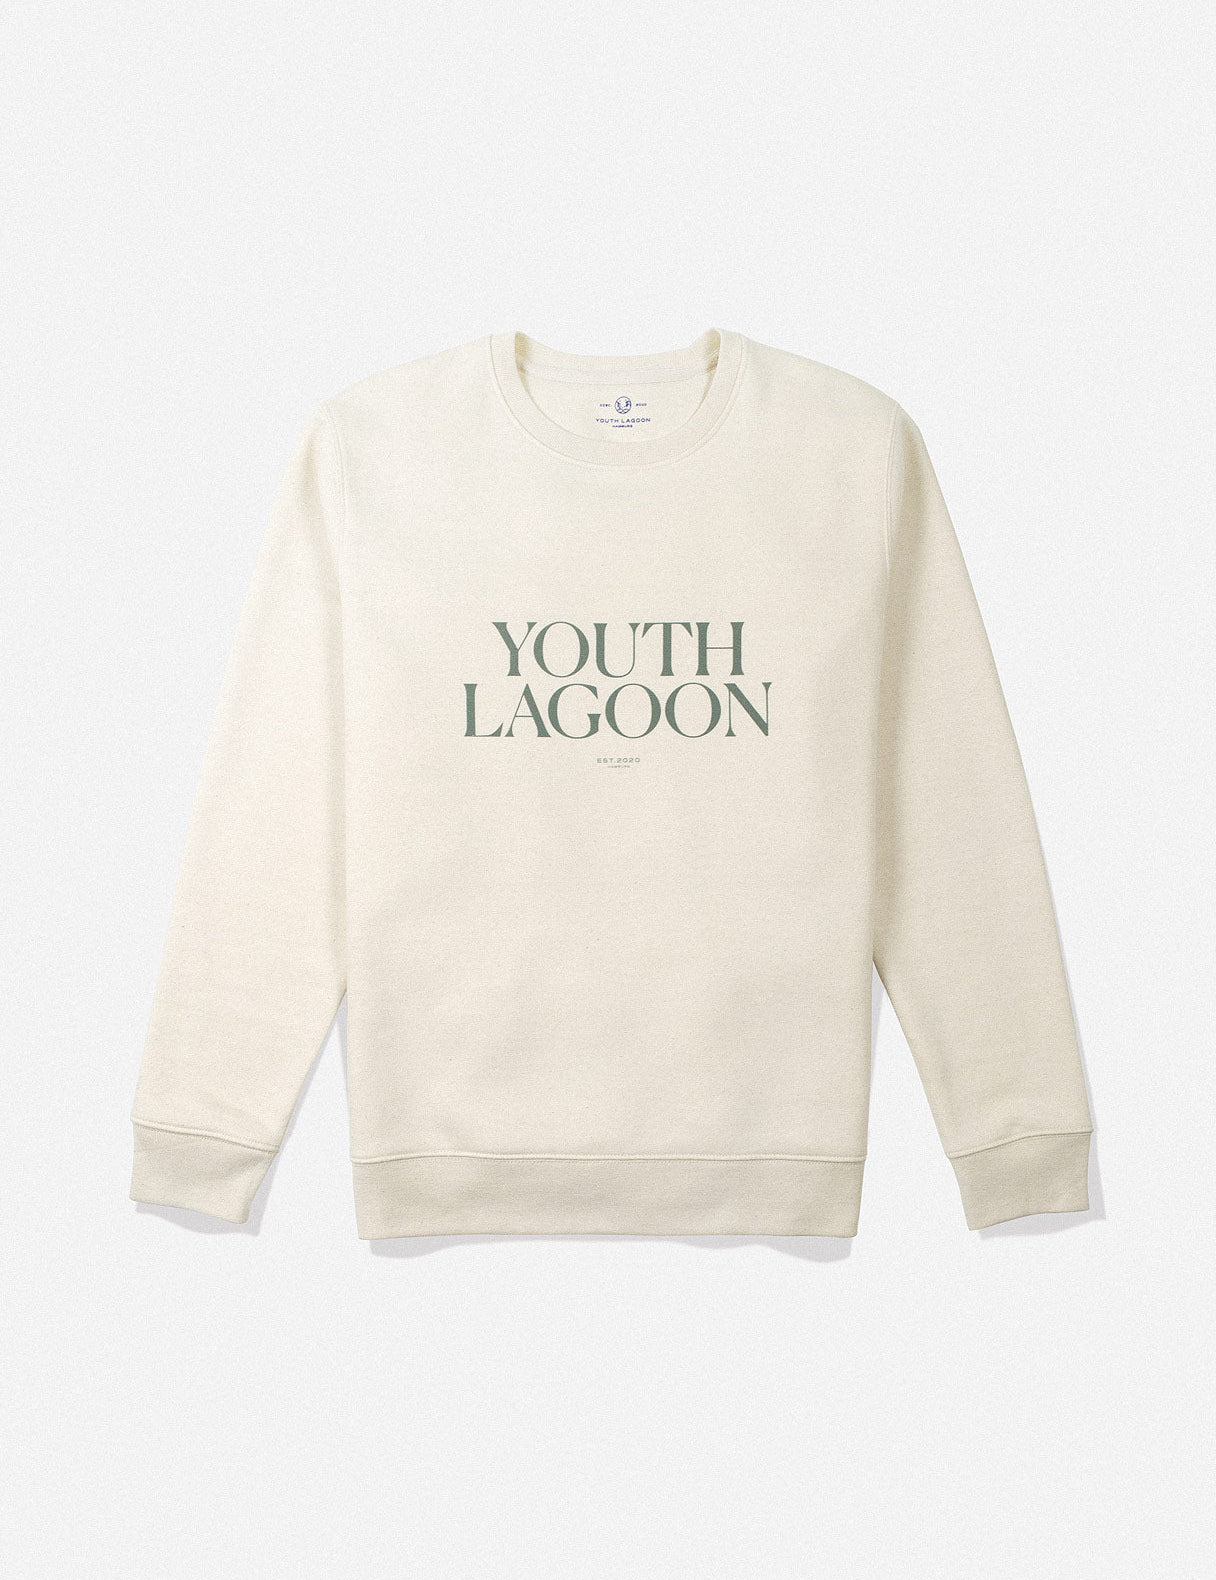 Lights — Unisex Sweatshirt - Youth Lagoon